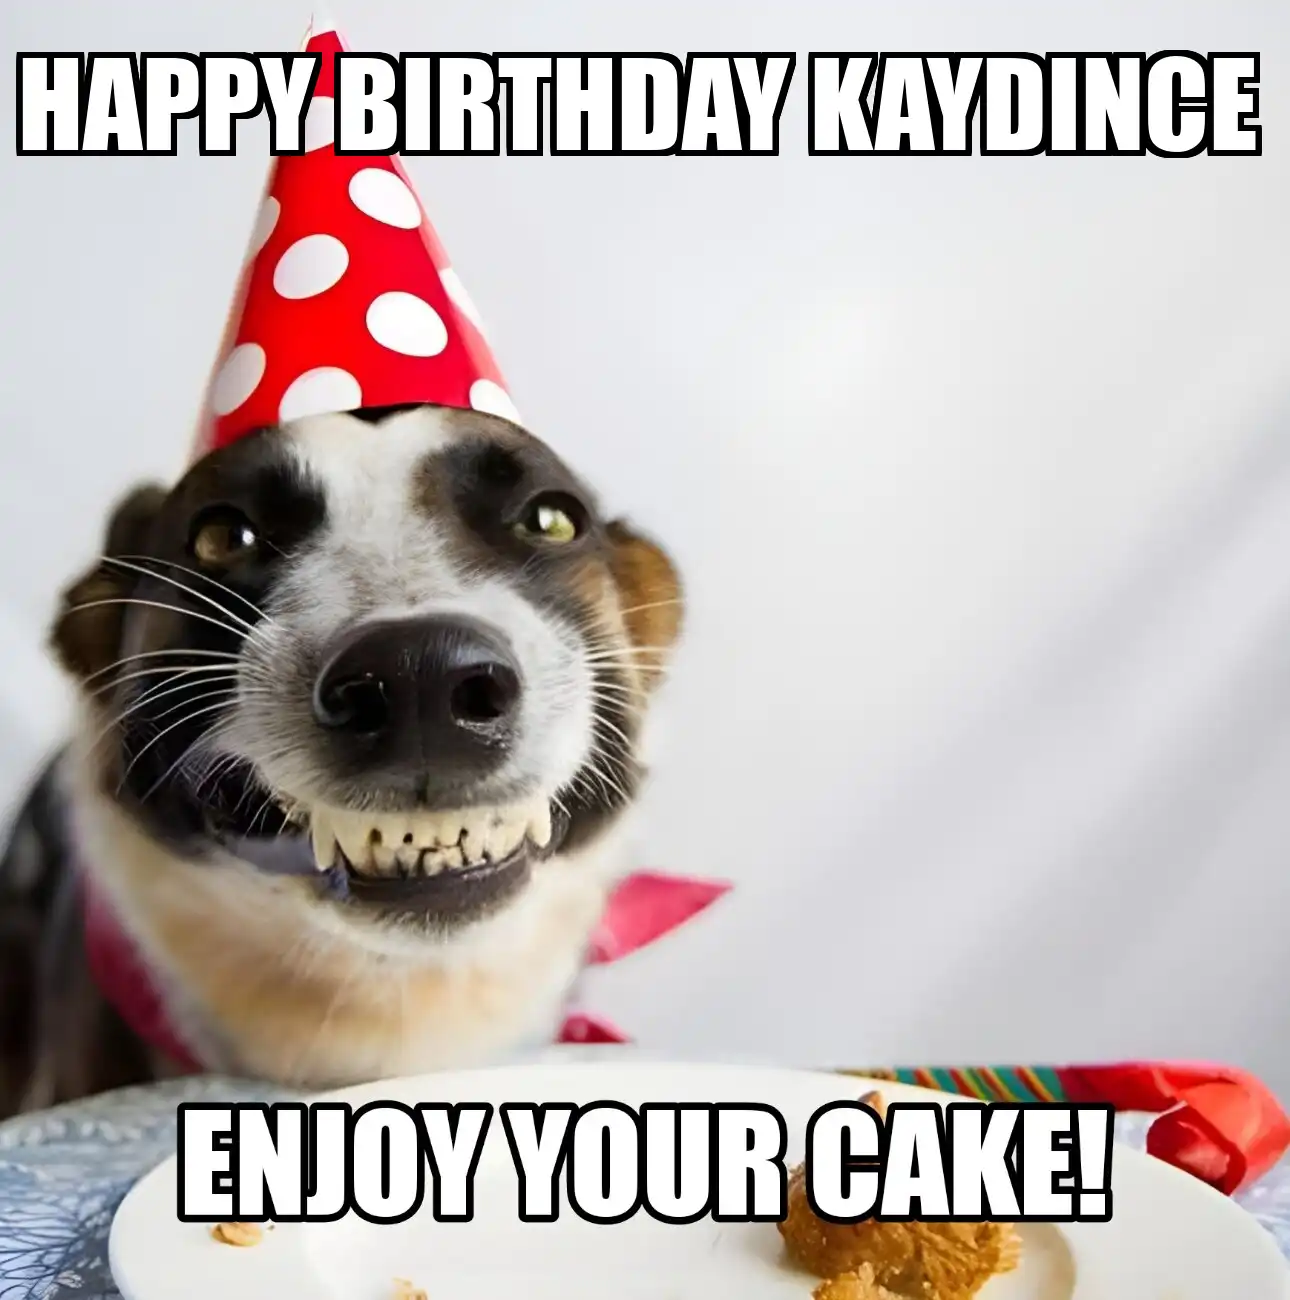 Happy Birthday Kaydince Enjoy Your Cake Dog Meme